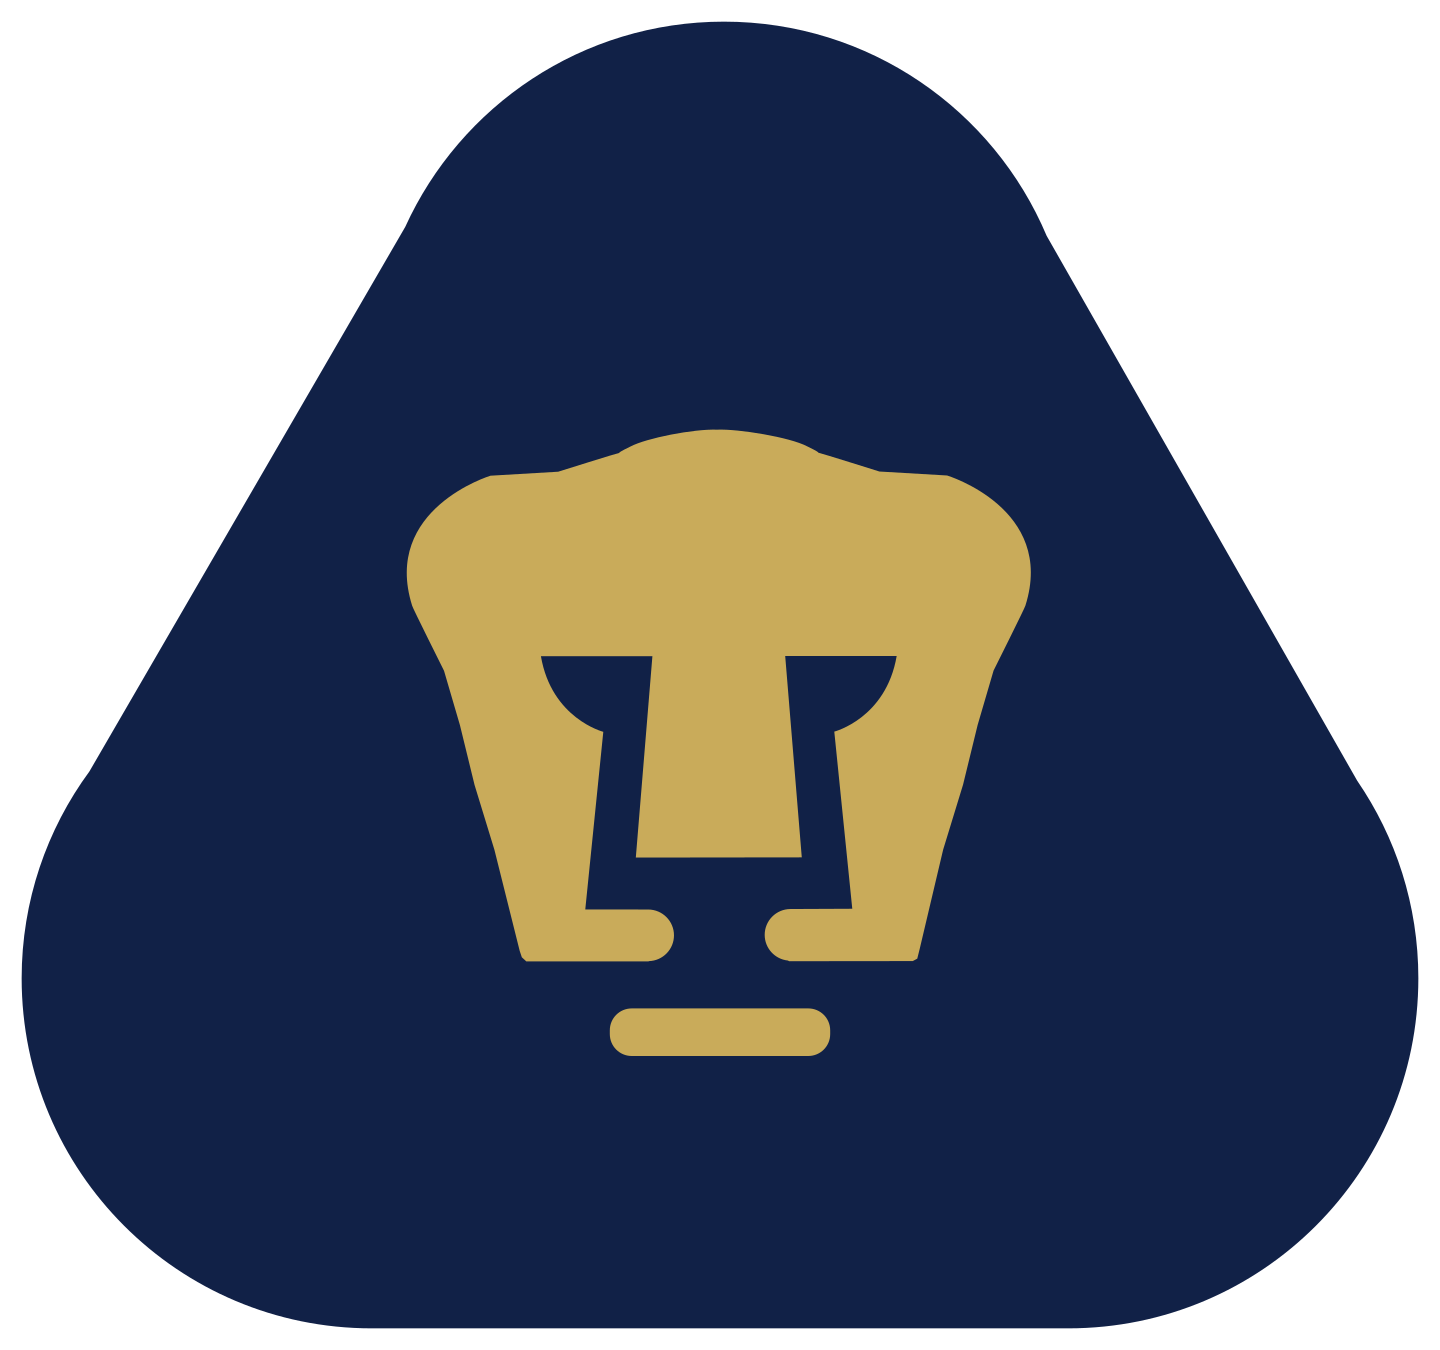 pumas unam logo 2 1 - Pumas UNAM Logo - Escudo